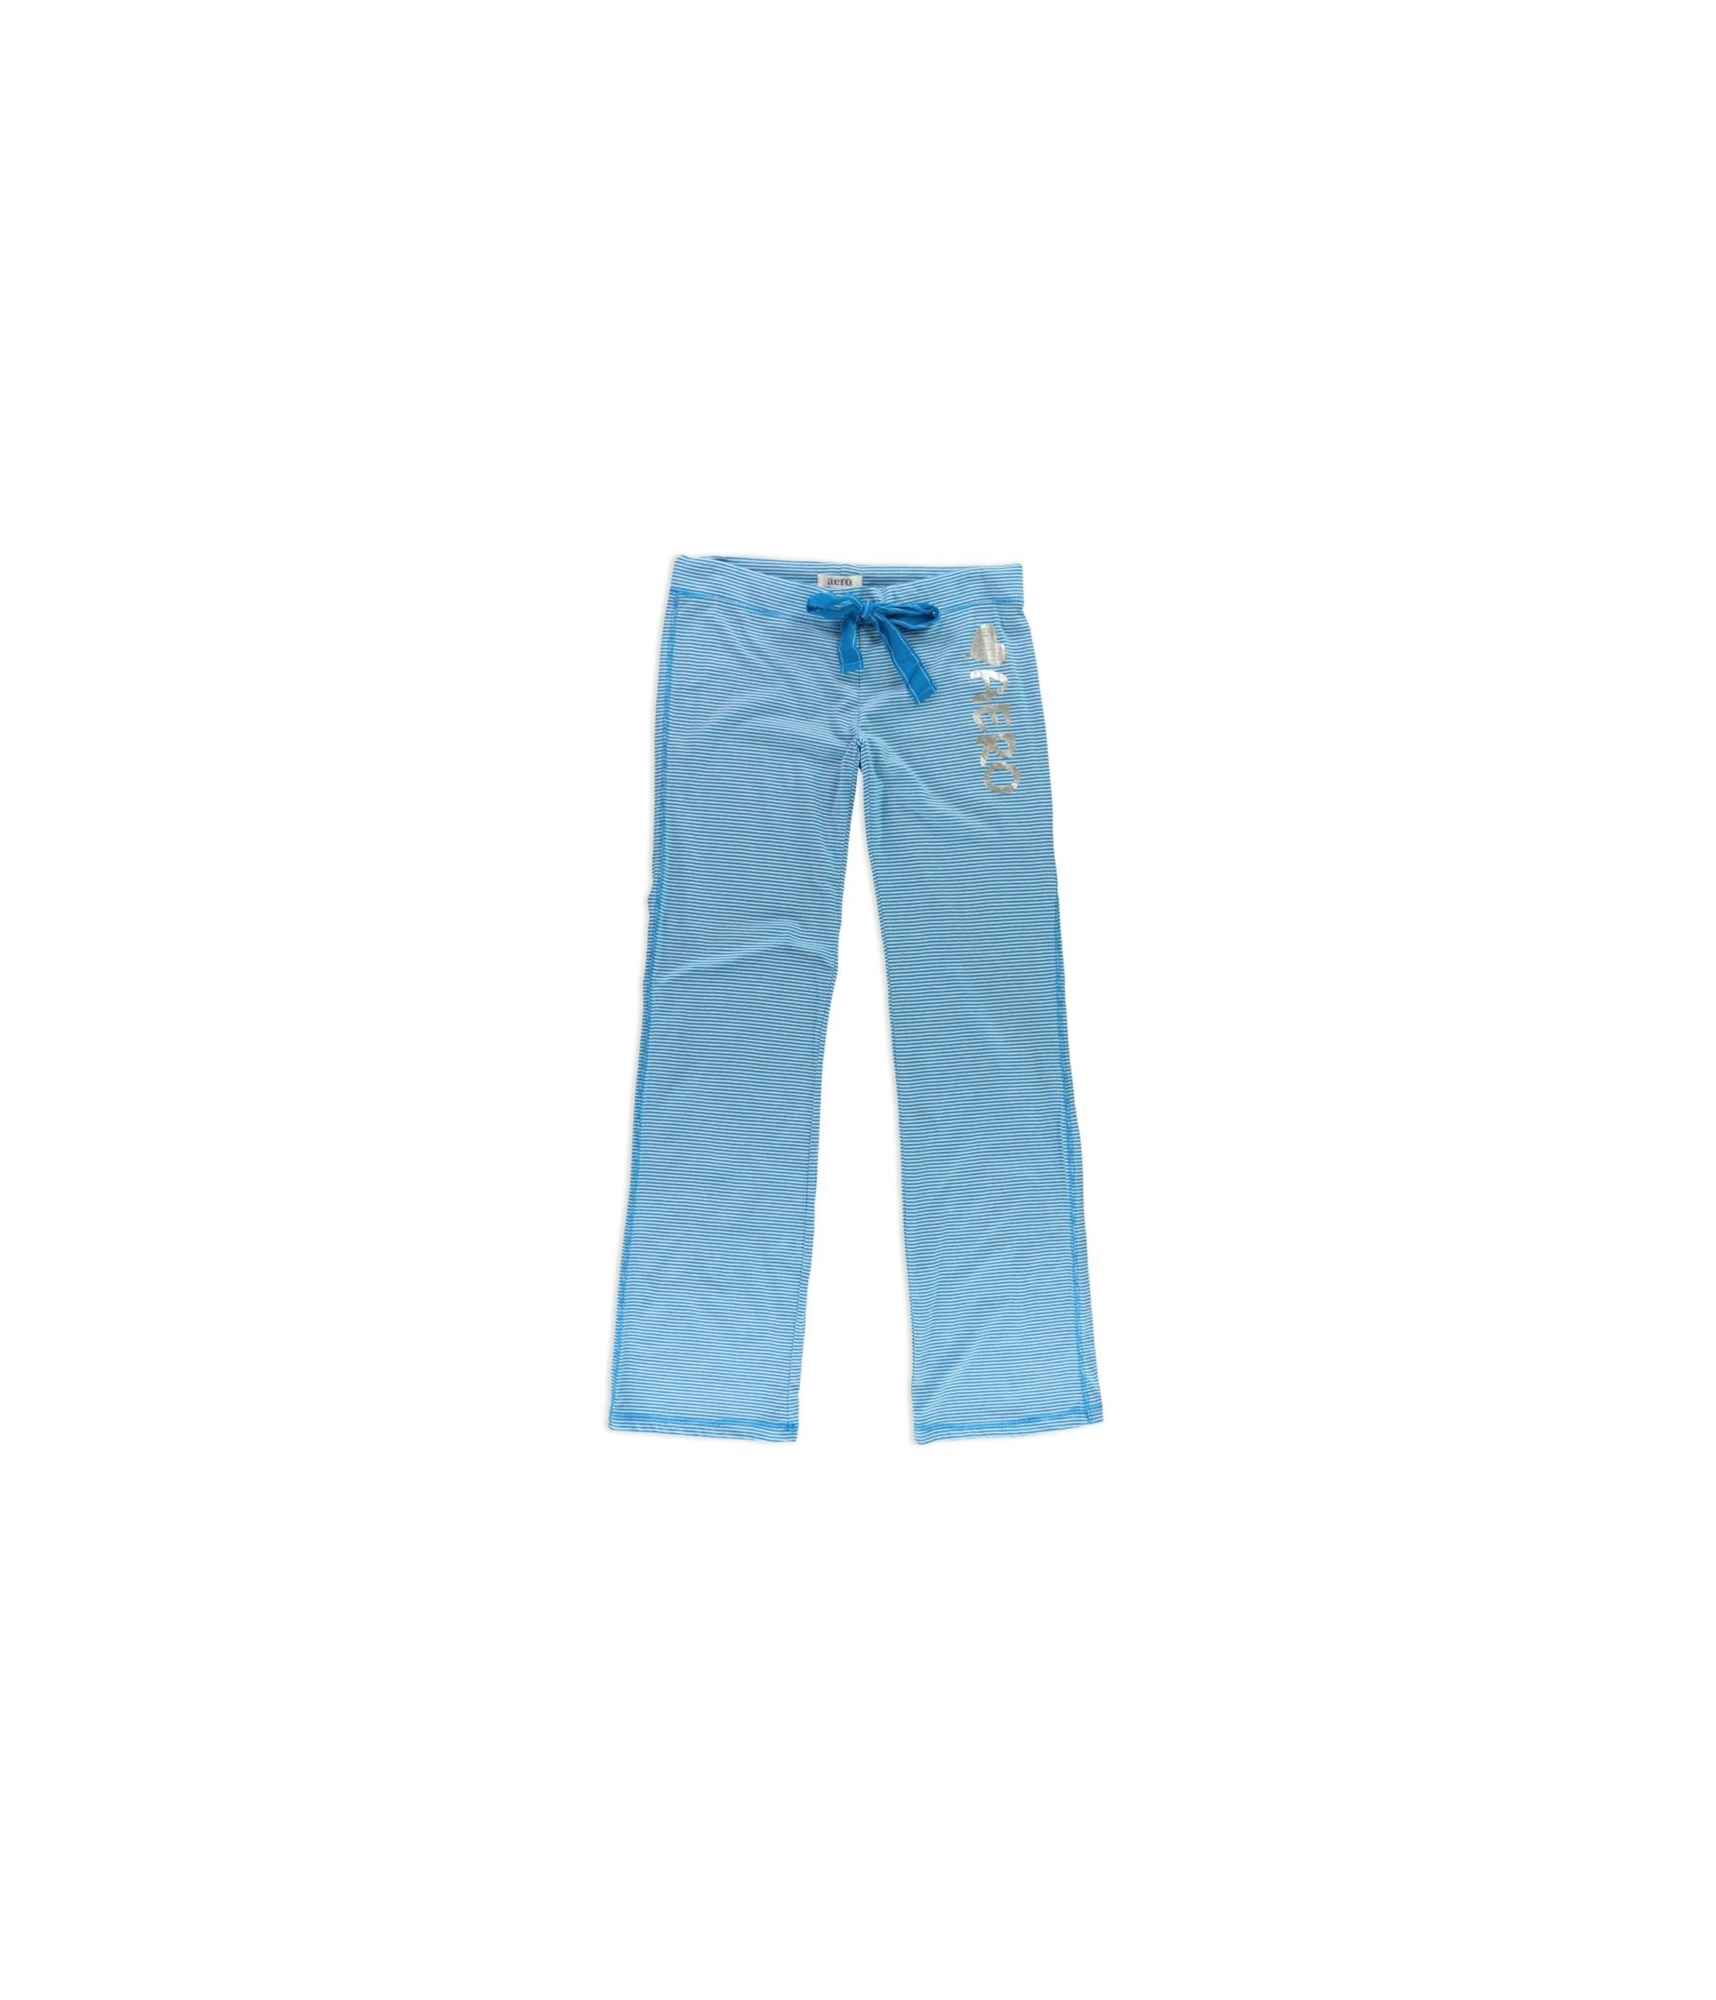 Buy AEROPOSTALE Womens Rope Tie Pajama Lounge Pants at Amazon.in